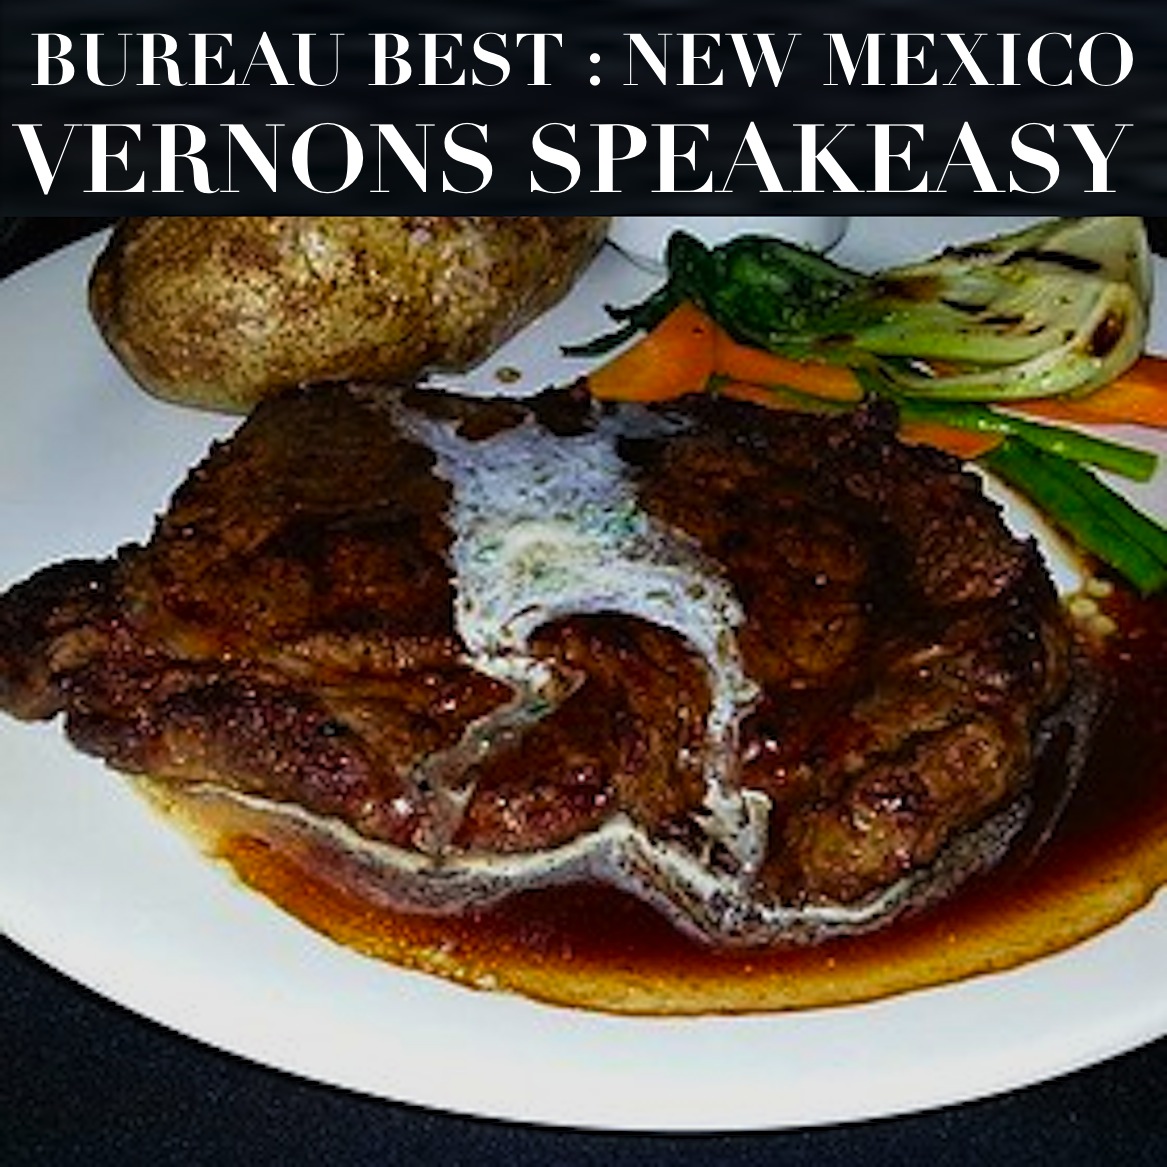 BUREAU BEST: NEW MEXICO